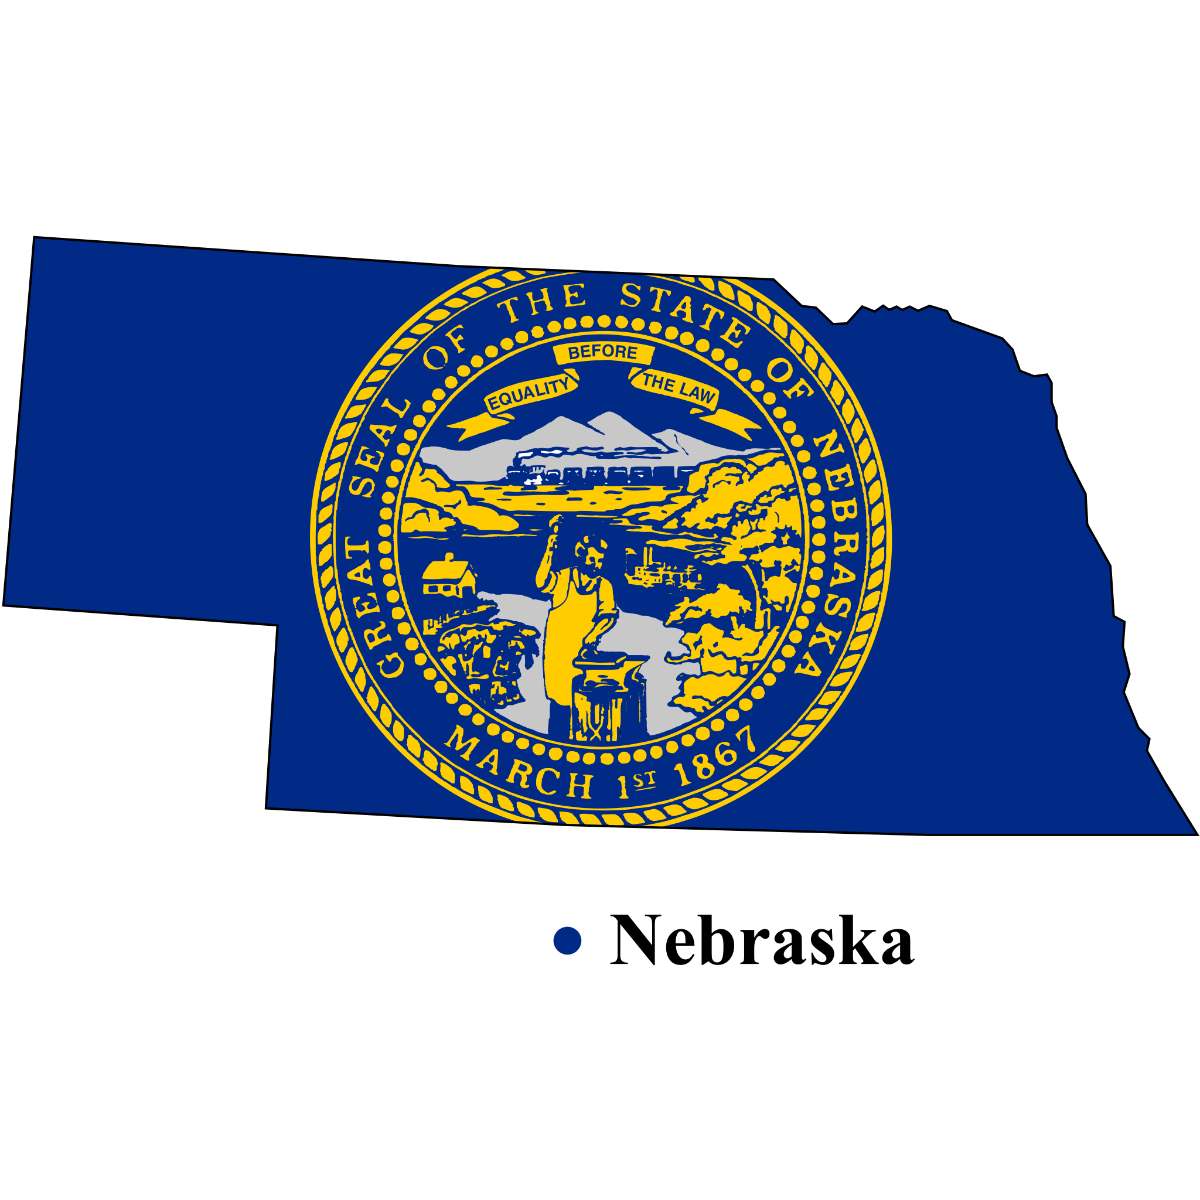 Nebraska State map cutout with Nebraska flag superimposed